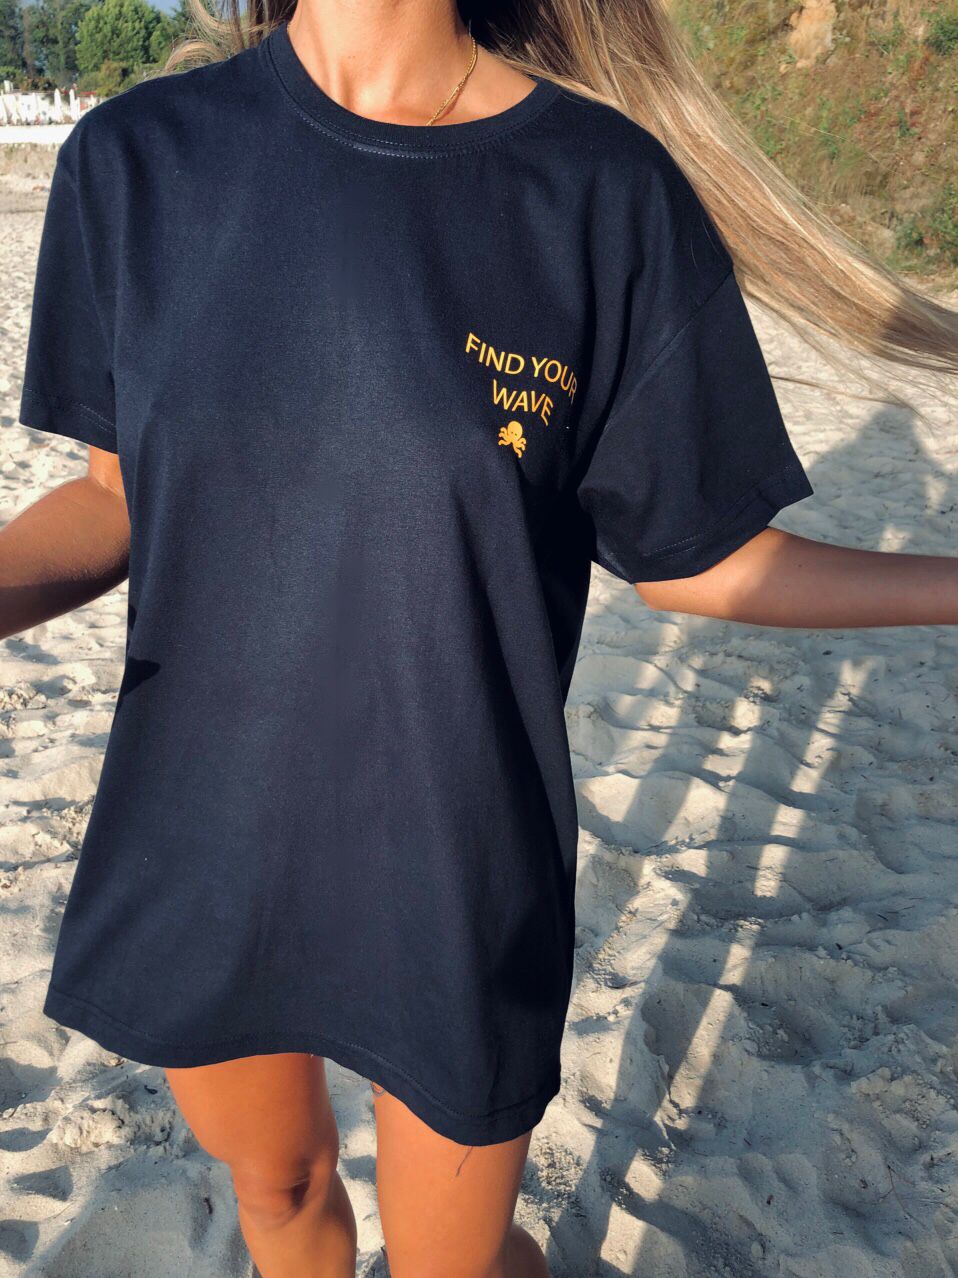 Camisetas logo pulpo SNOC - CAMISETA FIND YOUR WAVE CORAL  